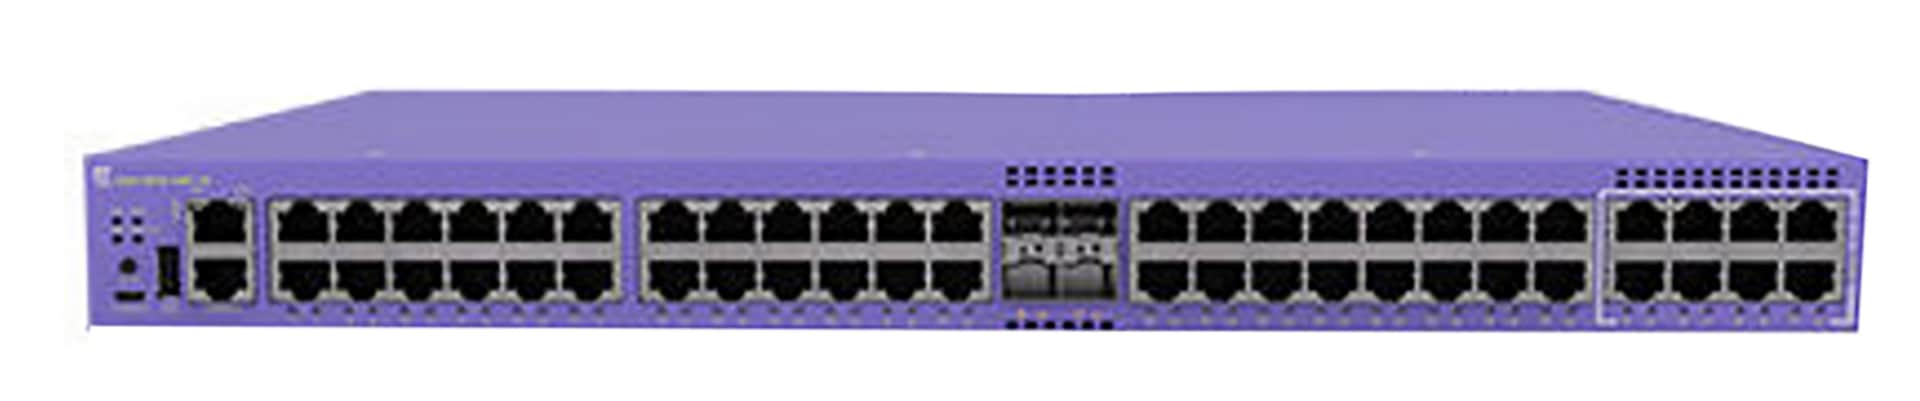 Extreme Networks 4120 48-Port Multi-Gigabit PoE Switch